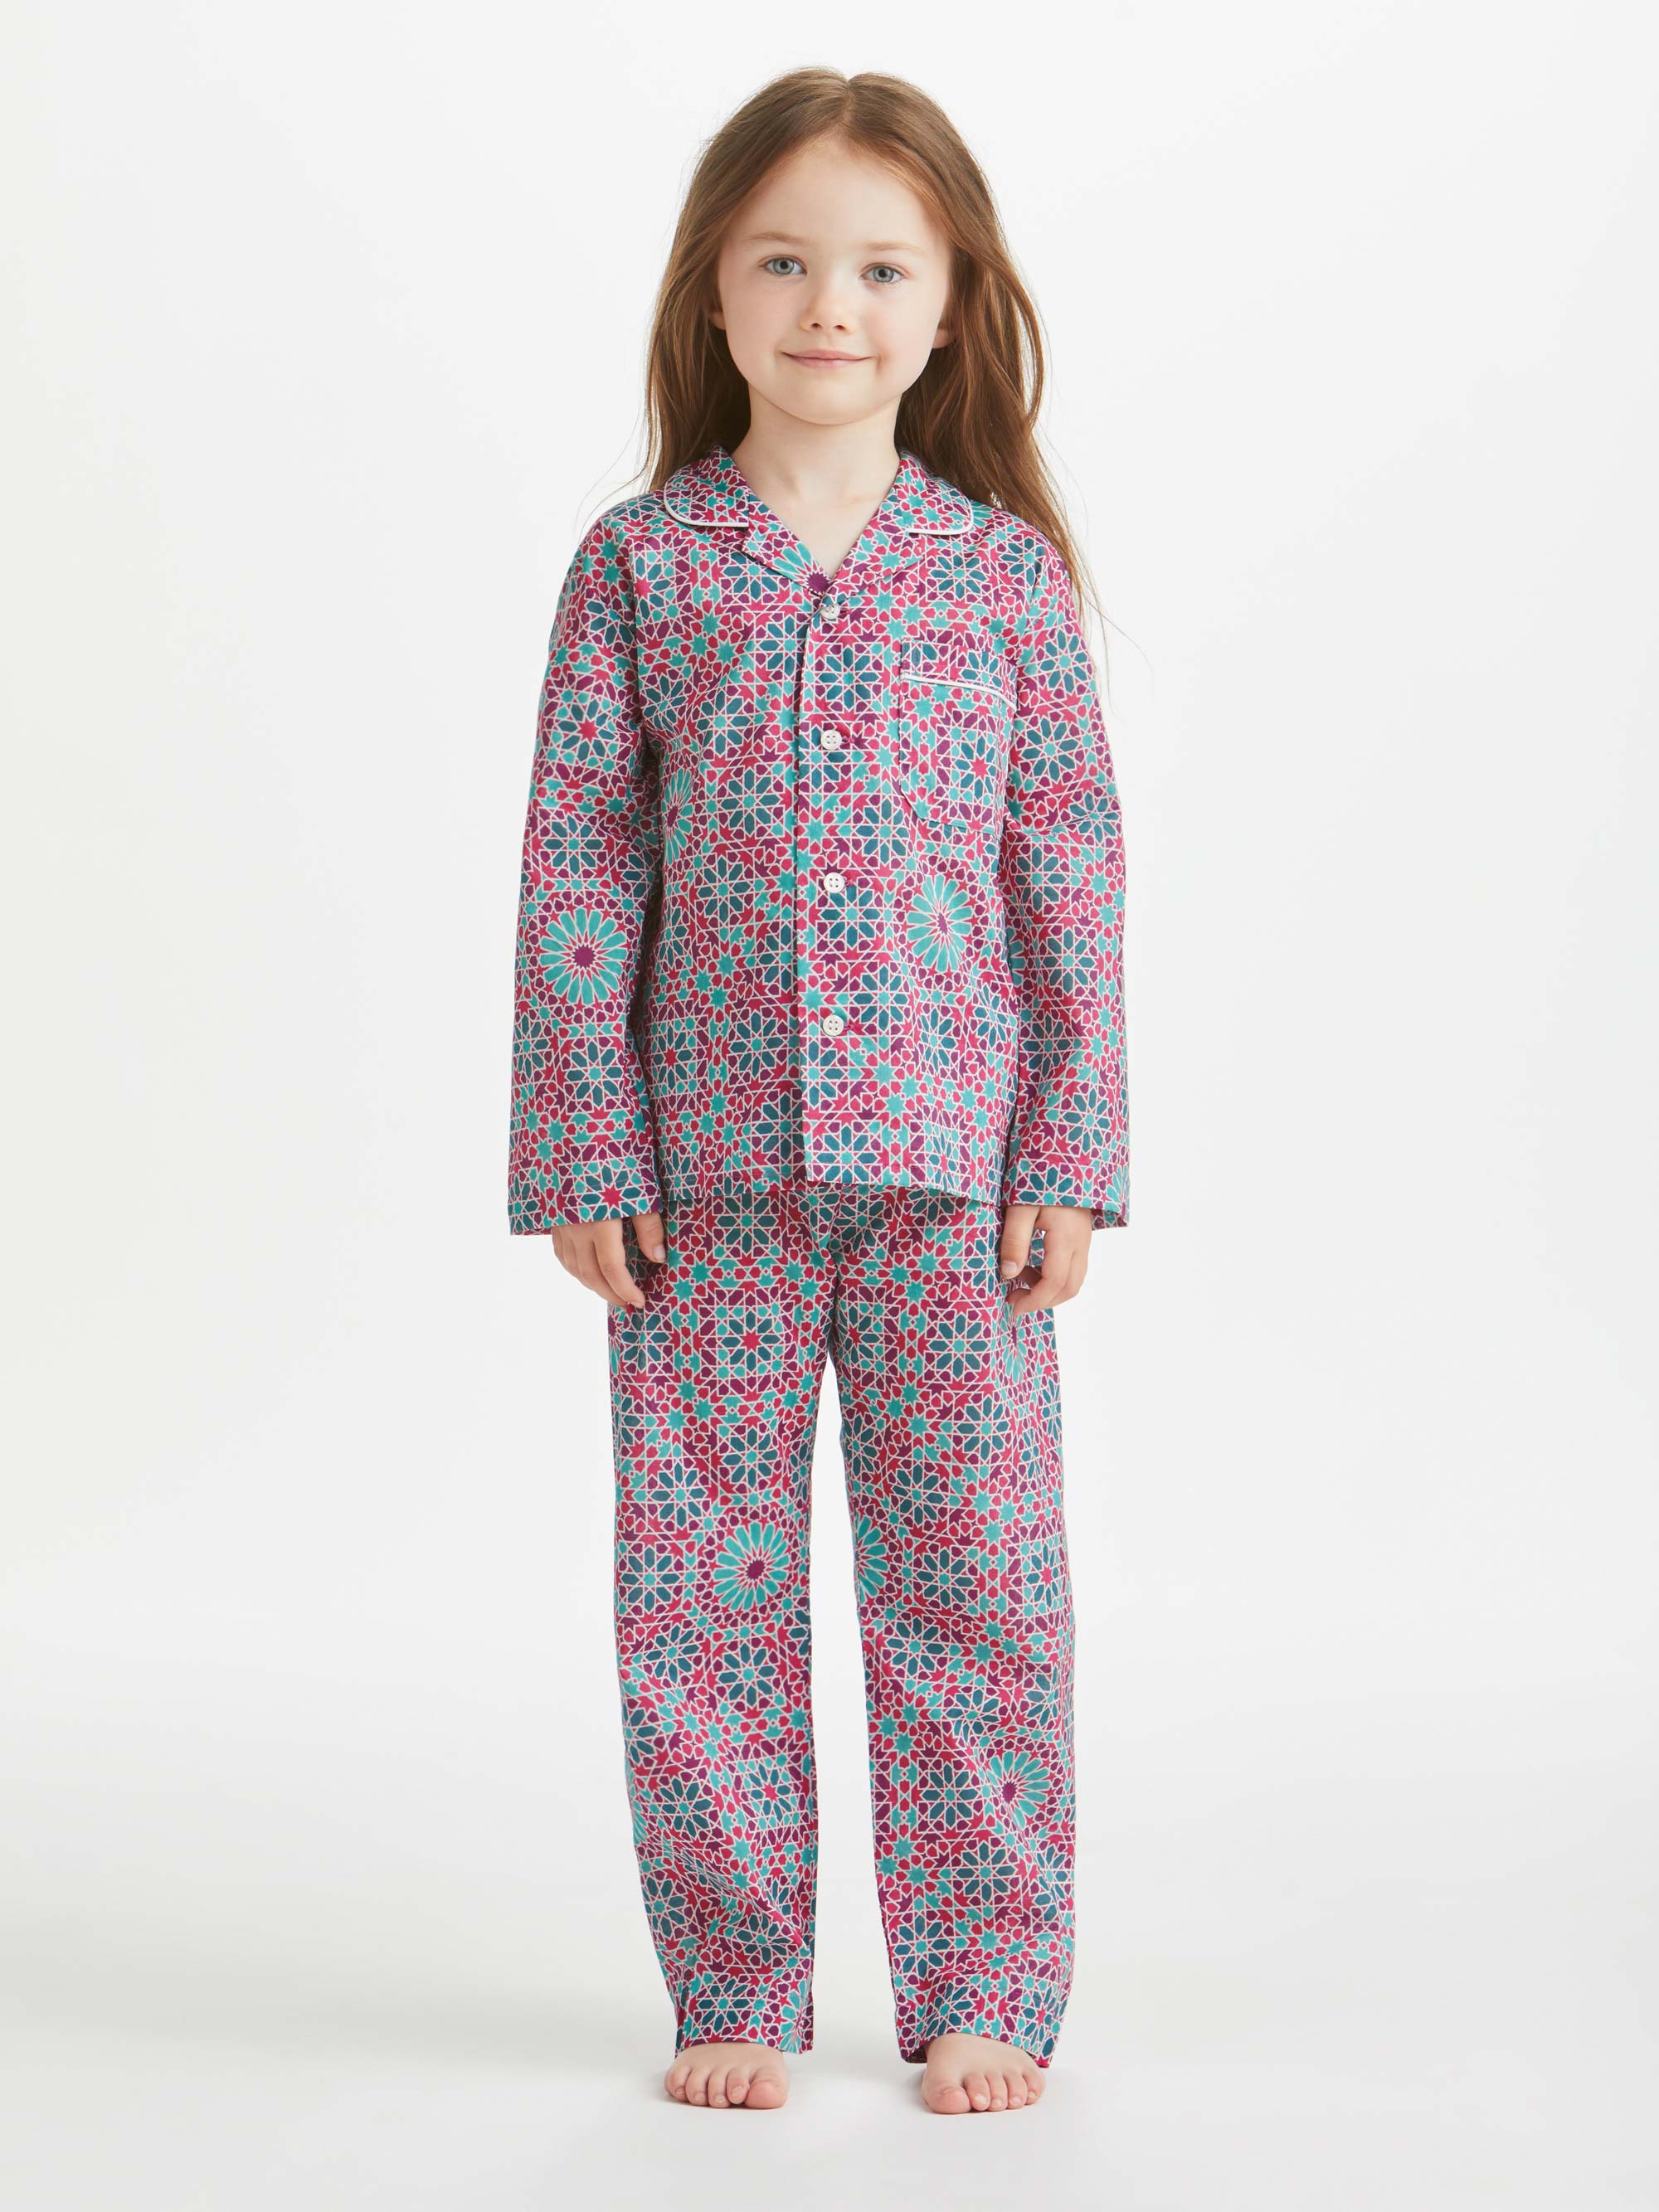 Kids' Pyjamas Ledbury 69 Cotton Batiste Pink